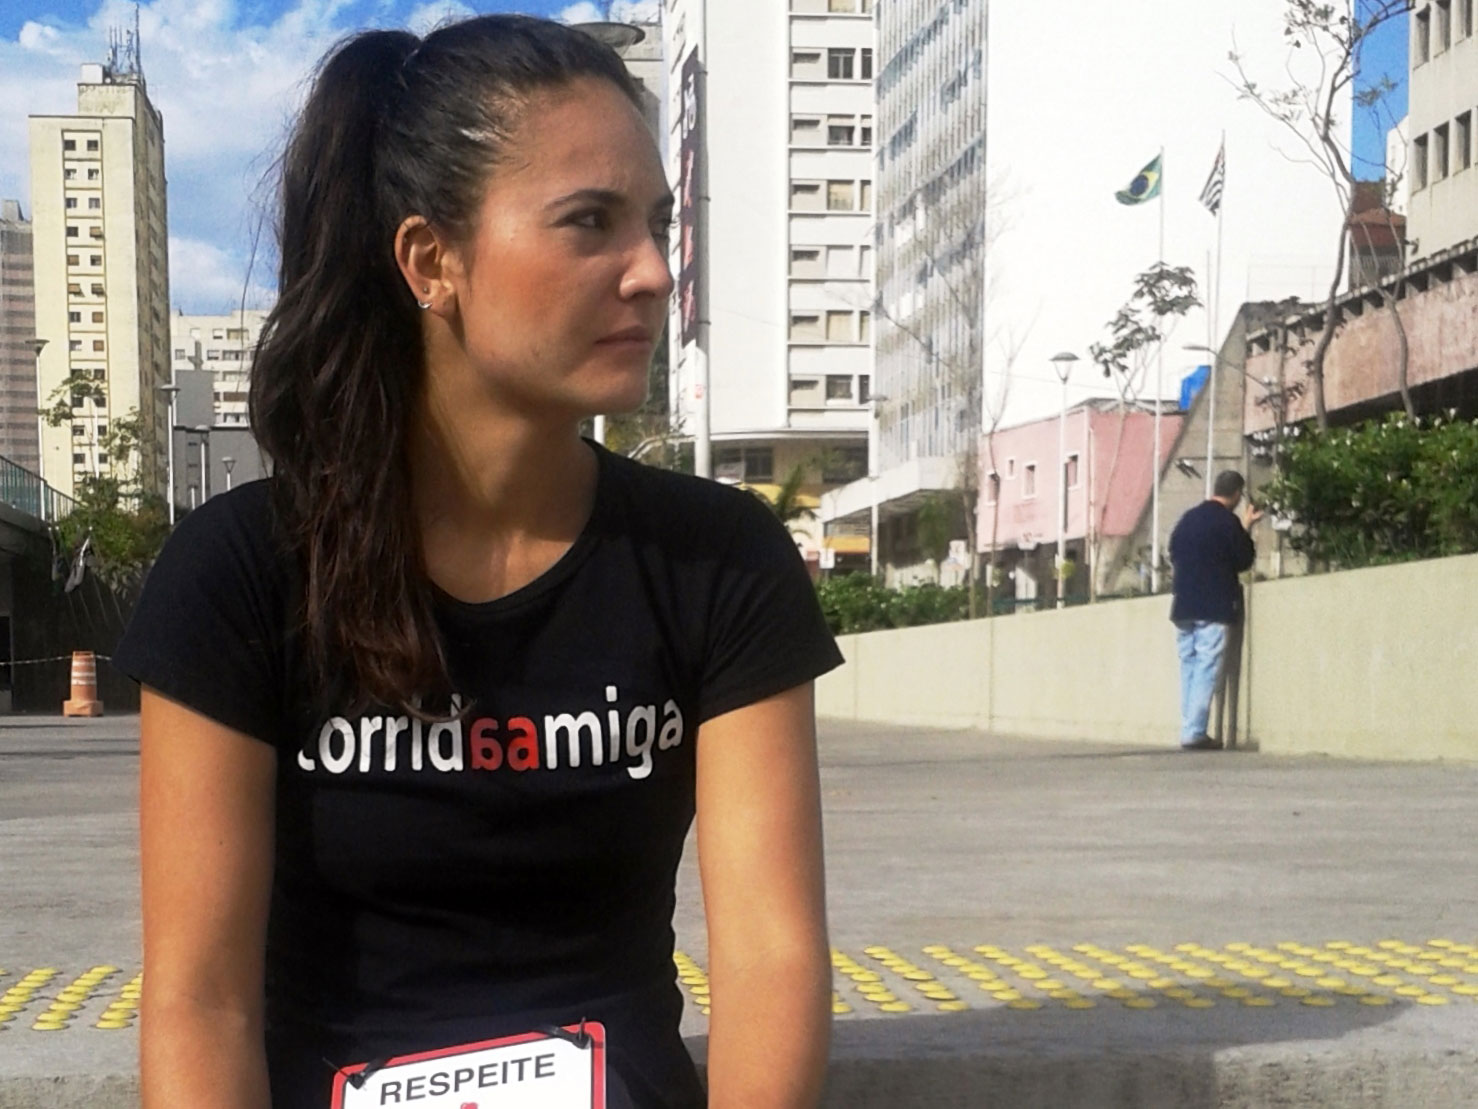 Corridaamiga Founder Silvia Cruz on Brazil’s “Friendly Running” Initiative